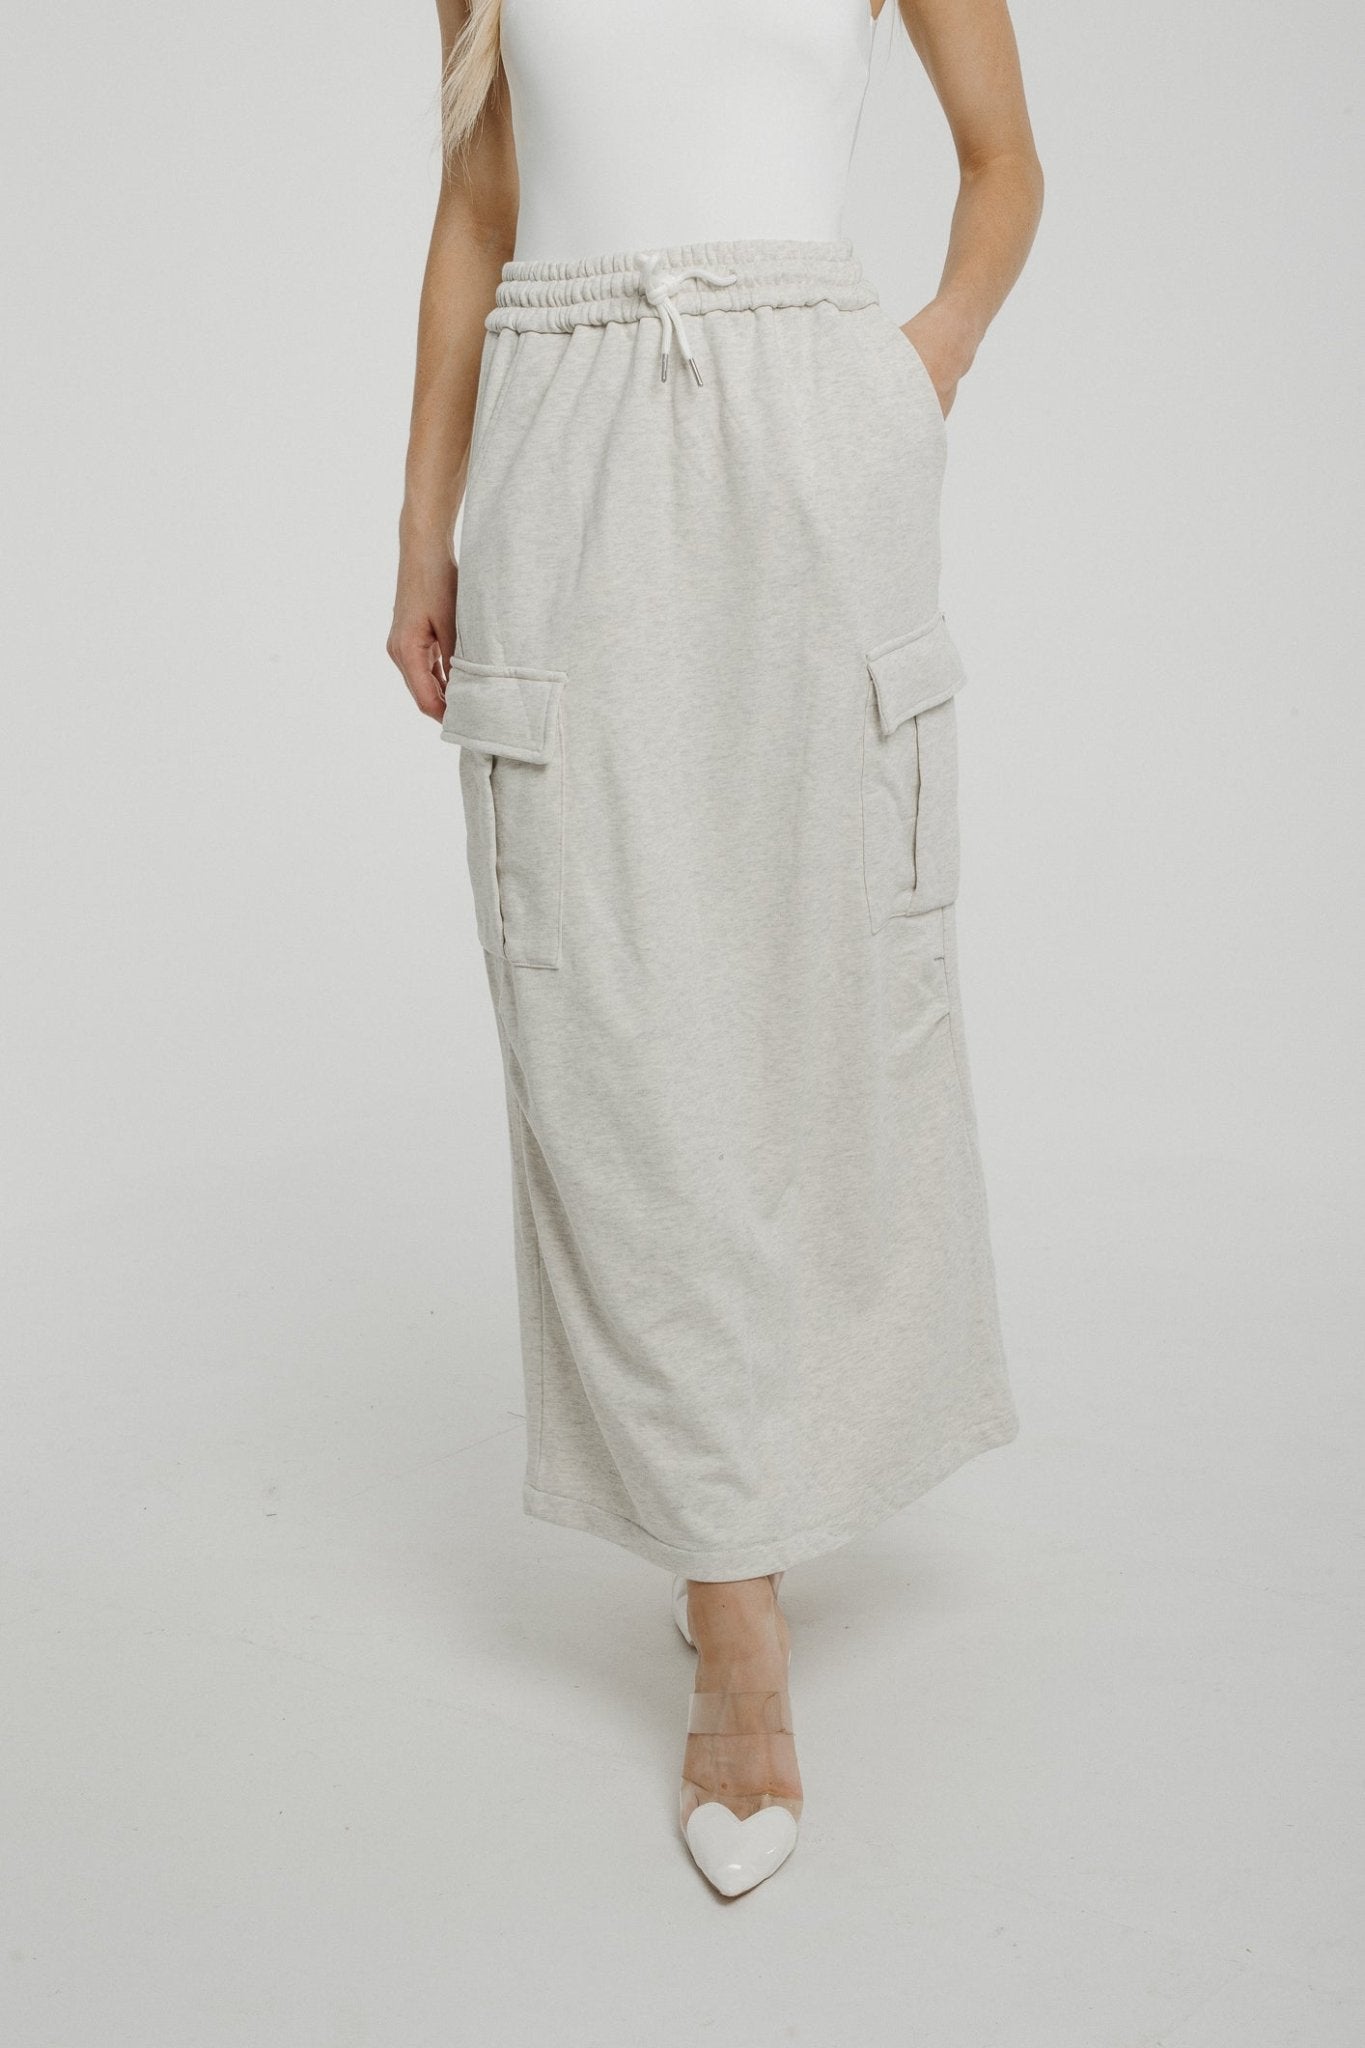 Summer Jersey Maxi Skirt In Grey - The Walk in Wardrobe